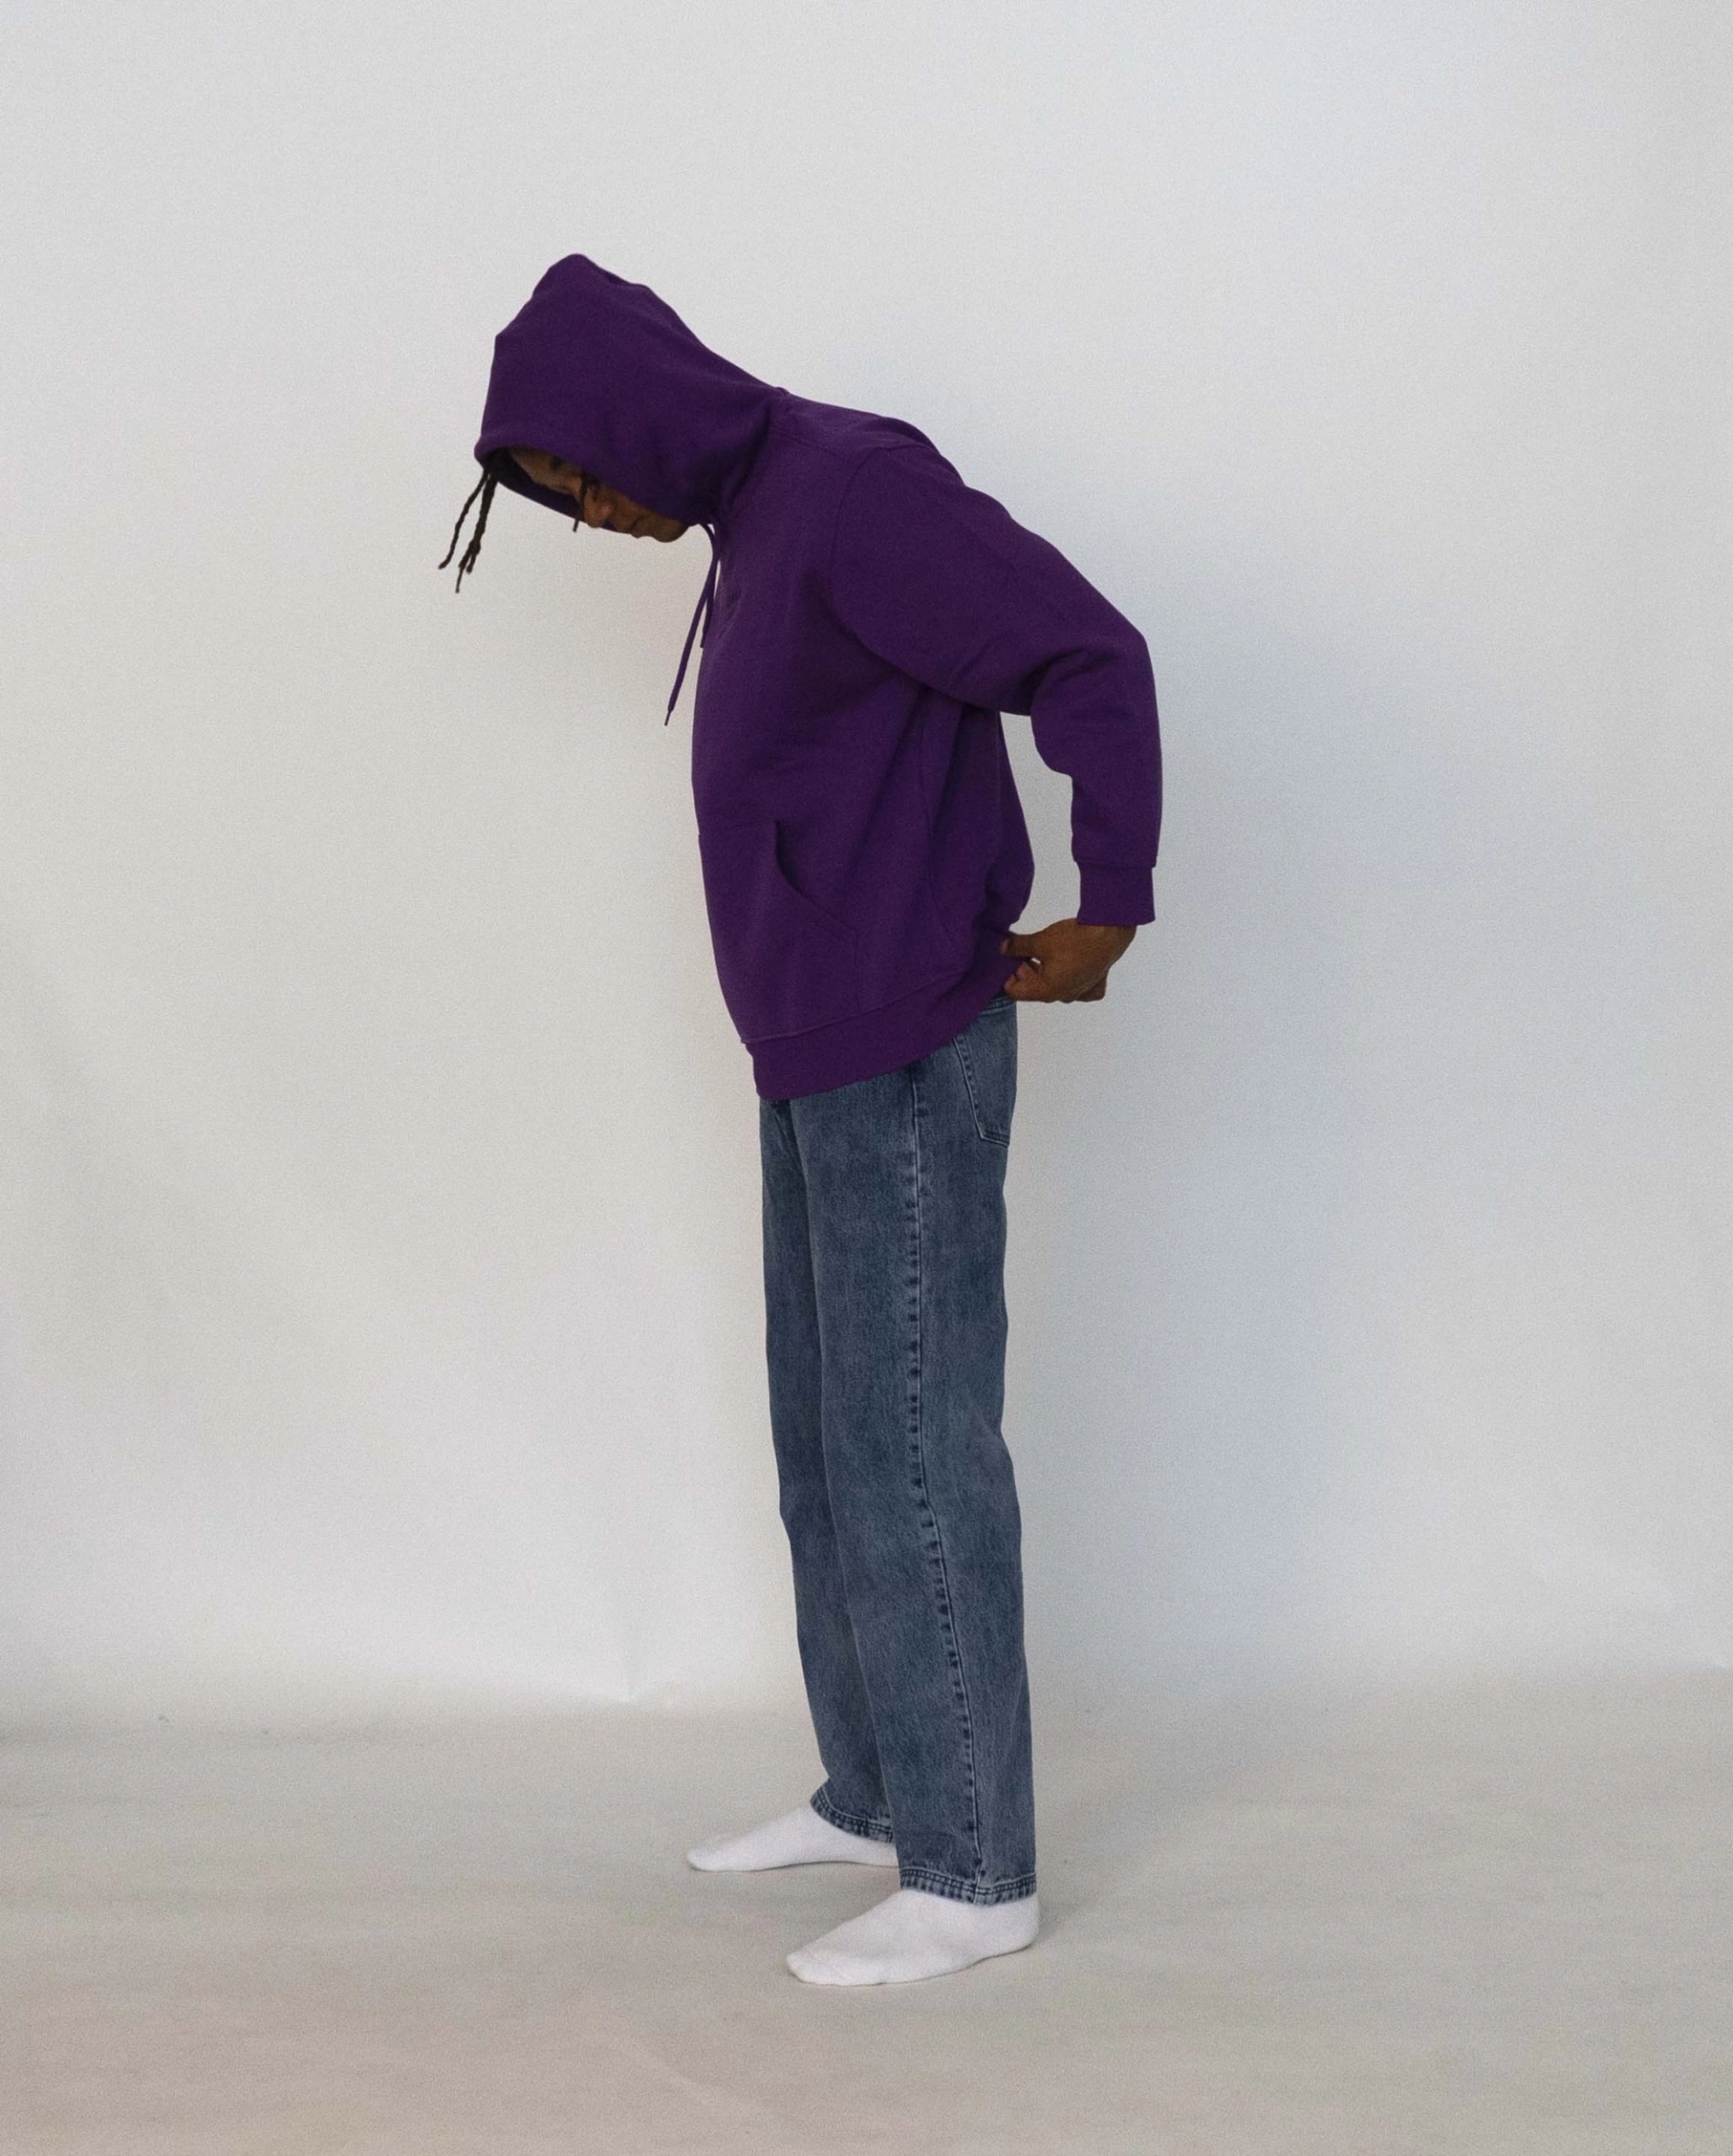 Buyegi wears the 032c LoveSexDreams "Team Société" hoodie in purple and "Next" jeans in light blue